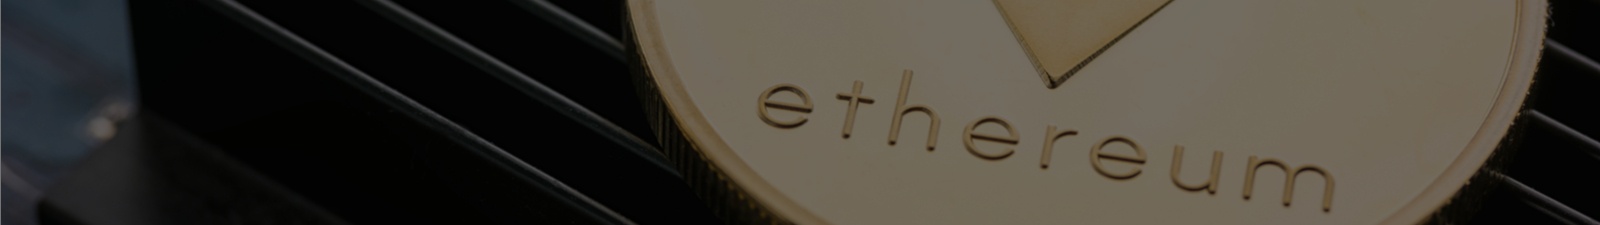 ethereum-blockchain-webinarlp-banner.jpg